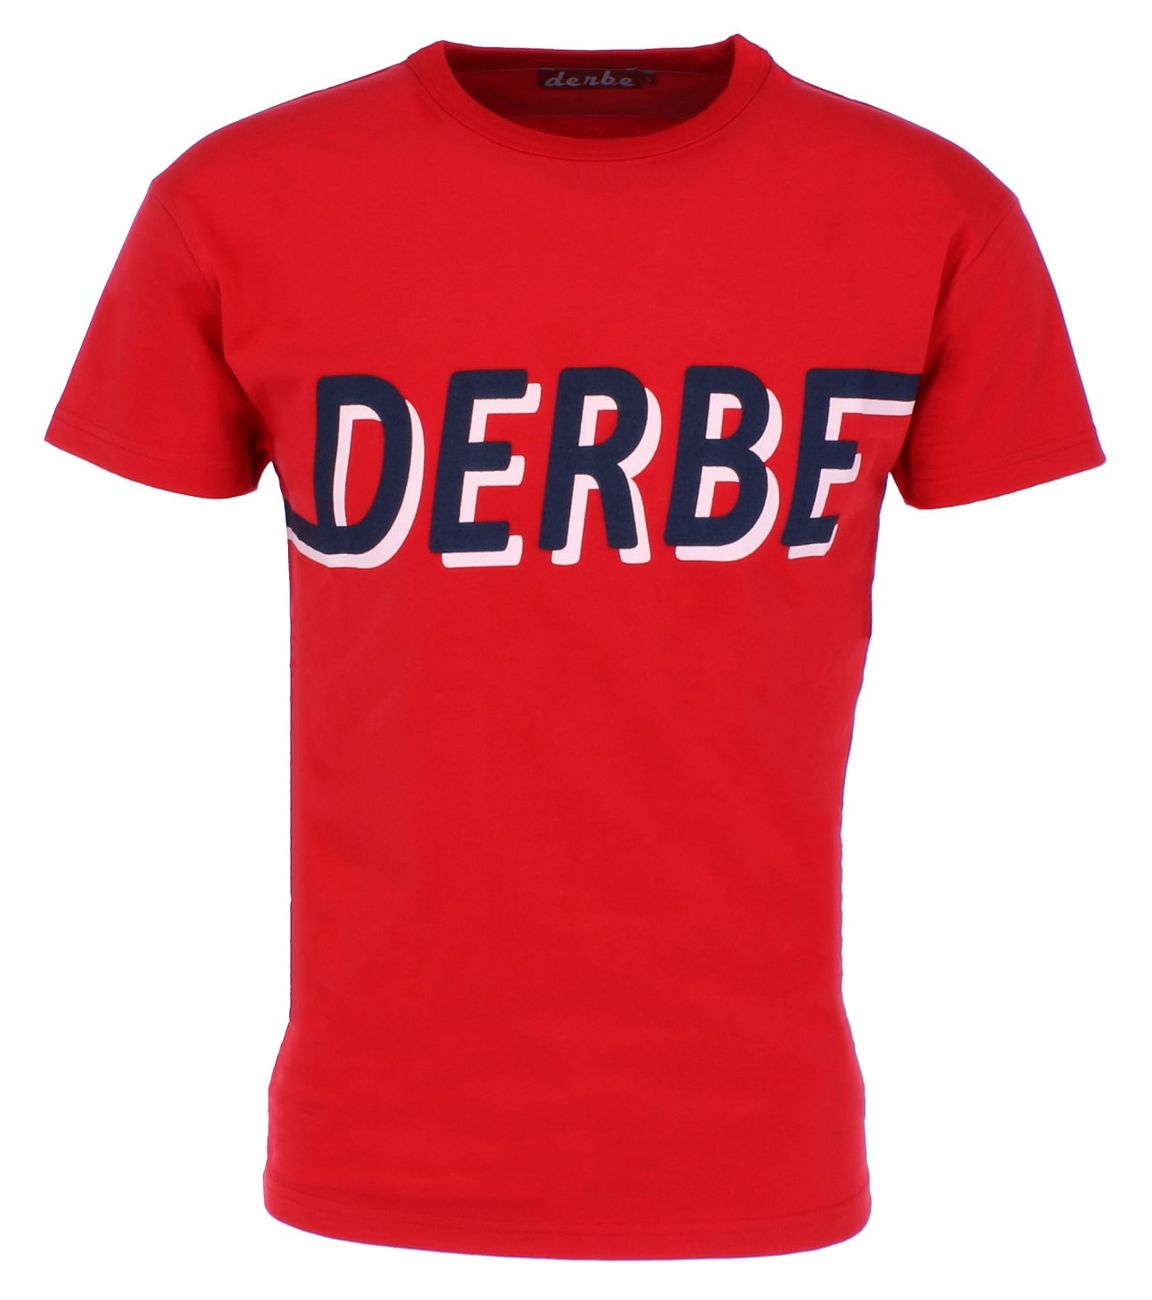 Derbe Hamburg D to E Boys Herren T-Shirt - Derbe Hamburg - SAGATOO - 4251634708220